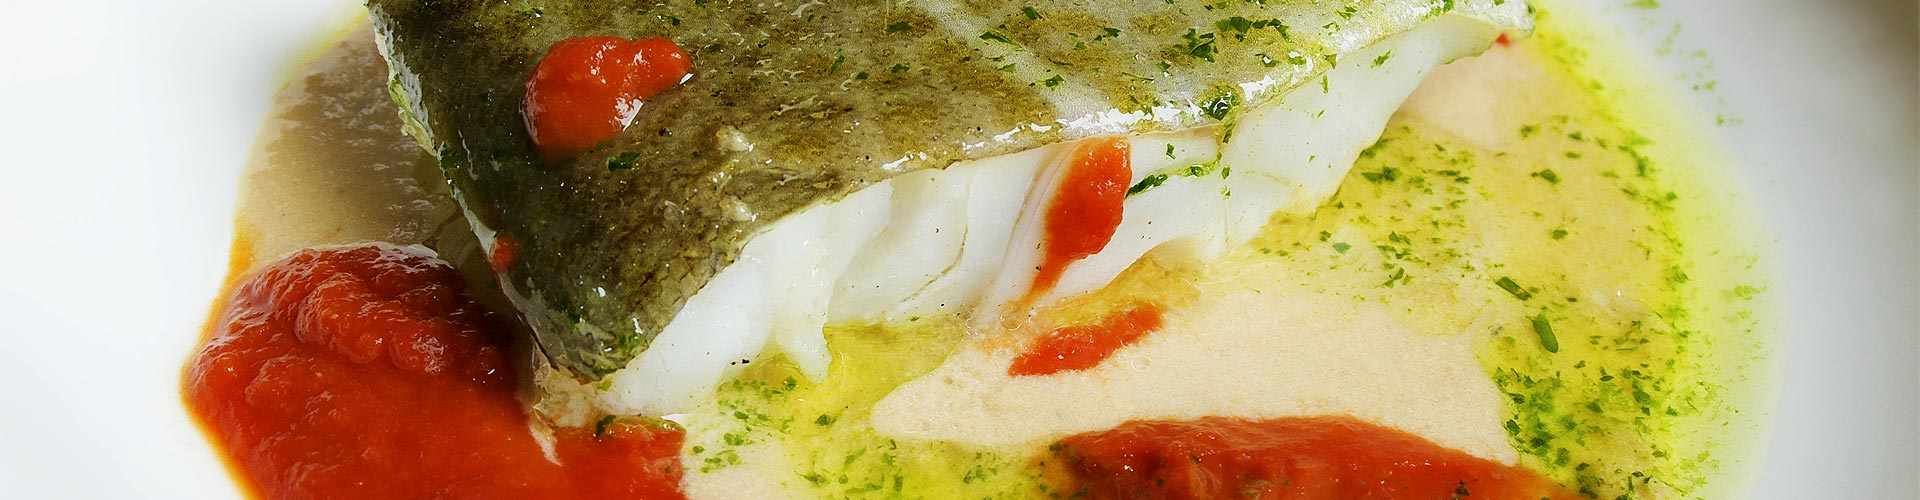 ¿Dónde comer bacalao en Almería?